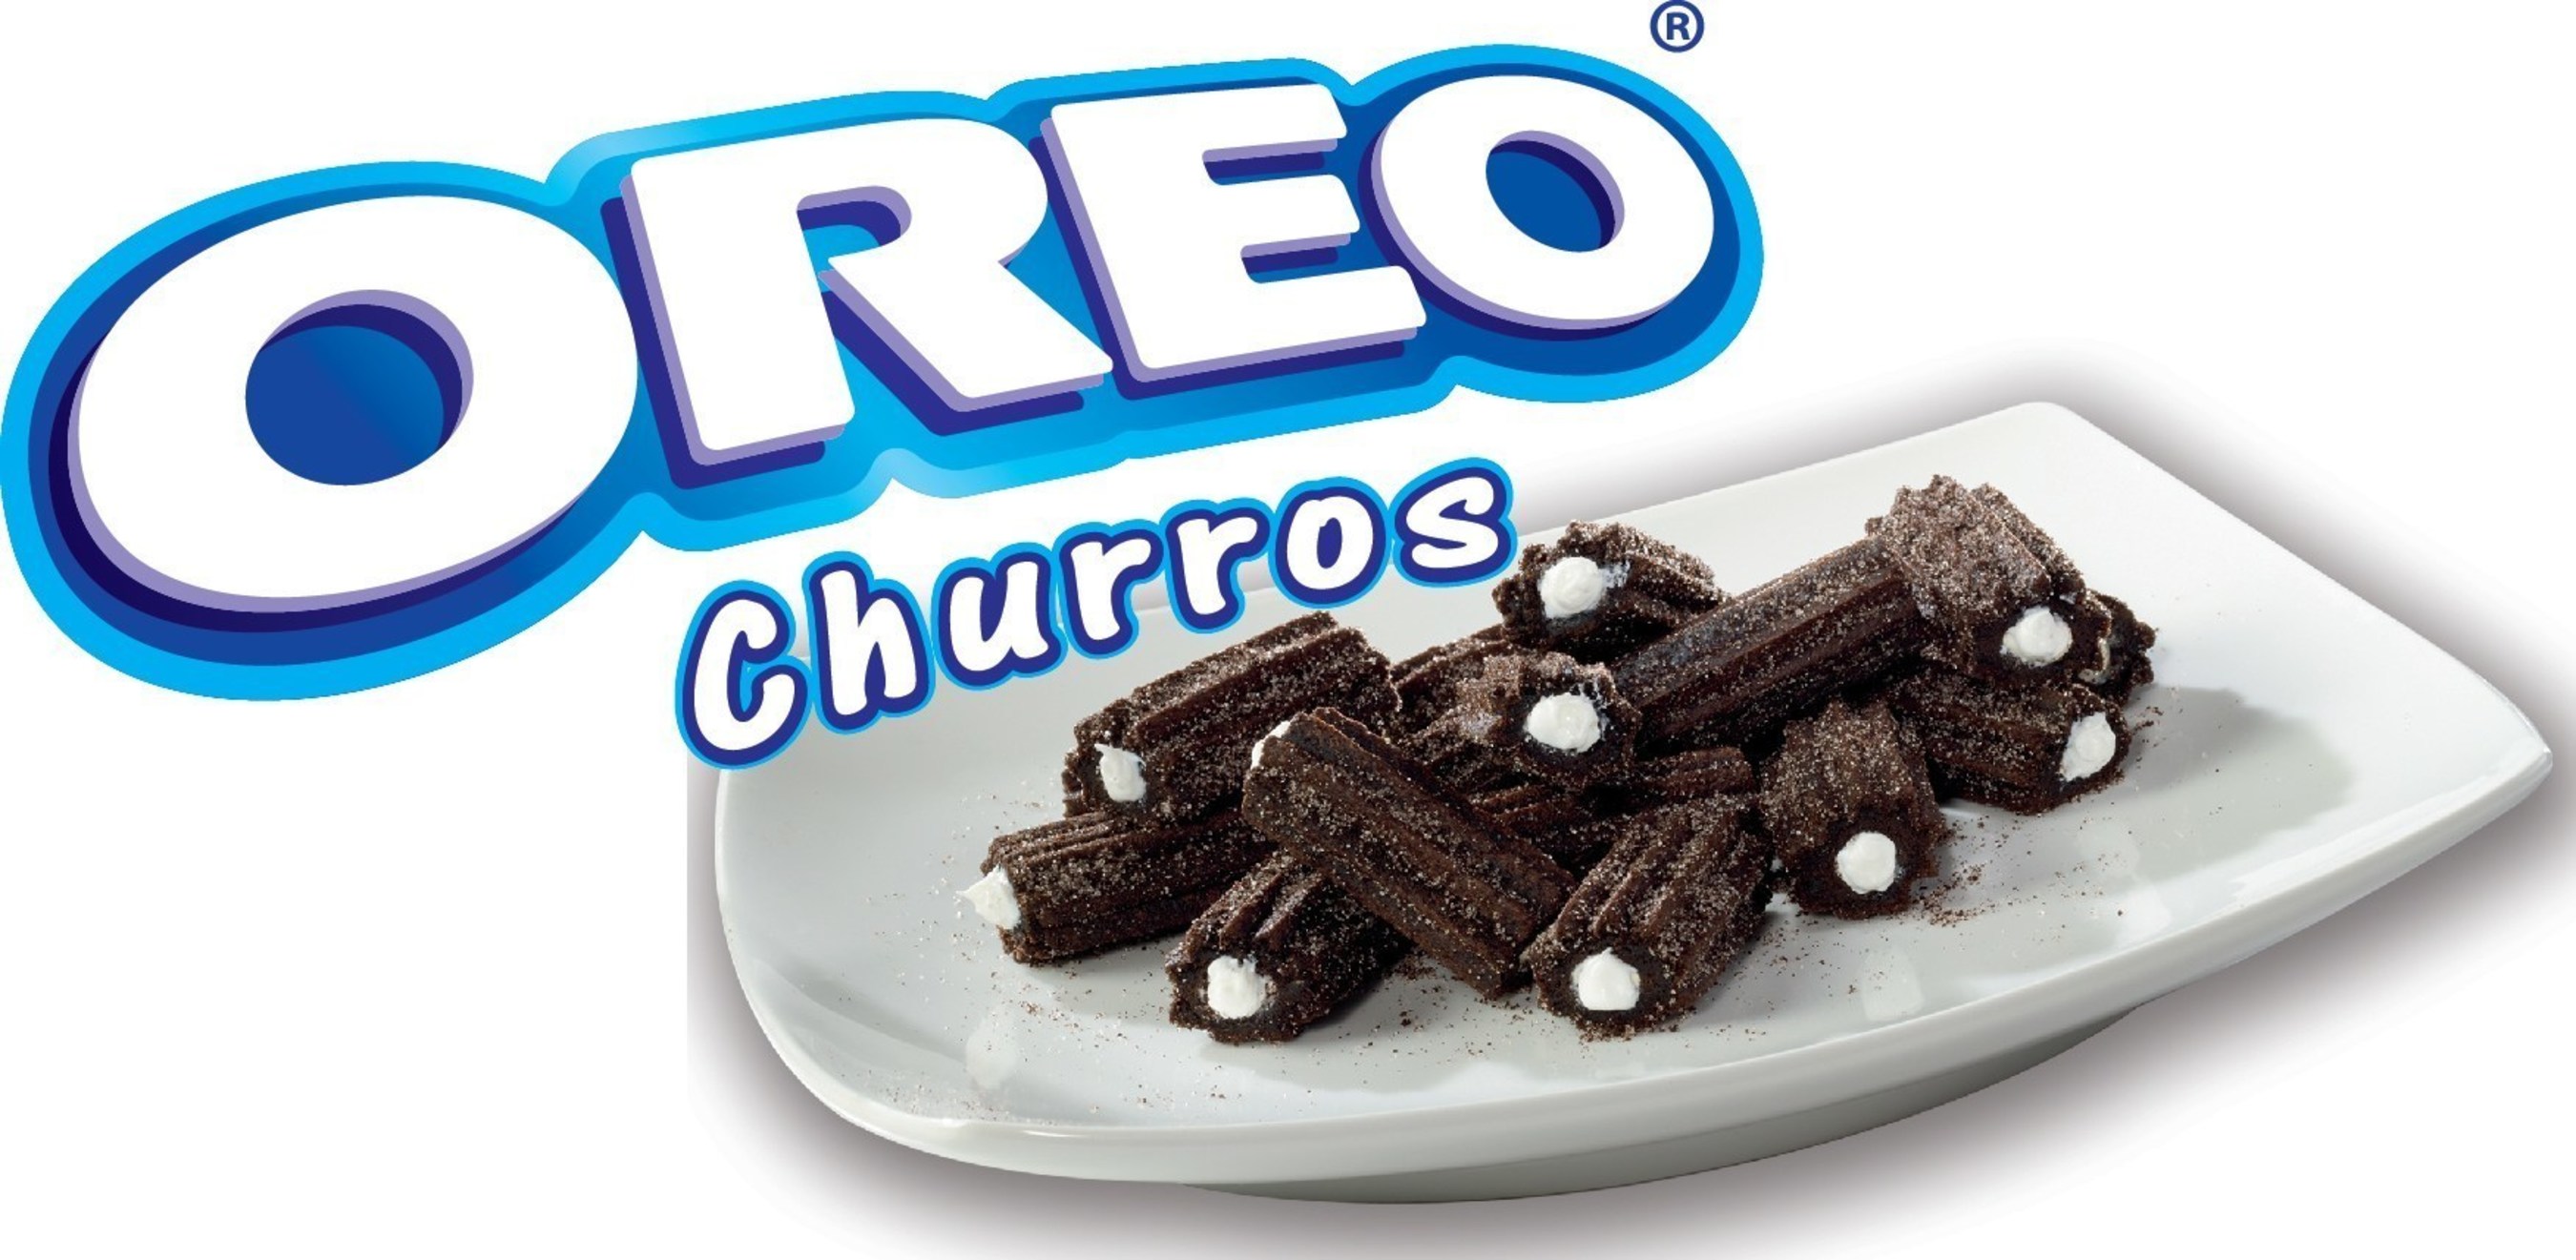 OREO Churros Creme Filled Bites with OREO Churros logo